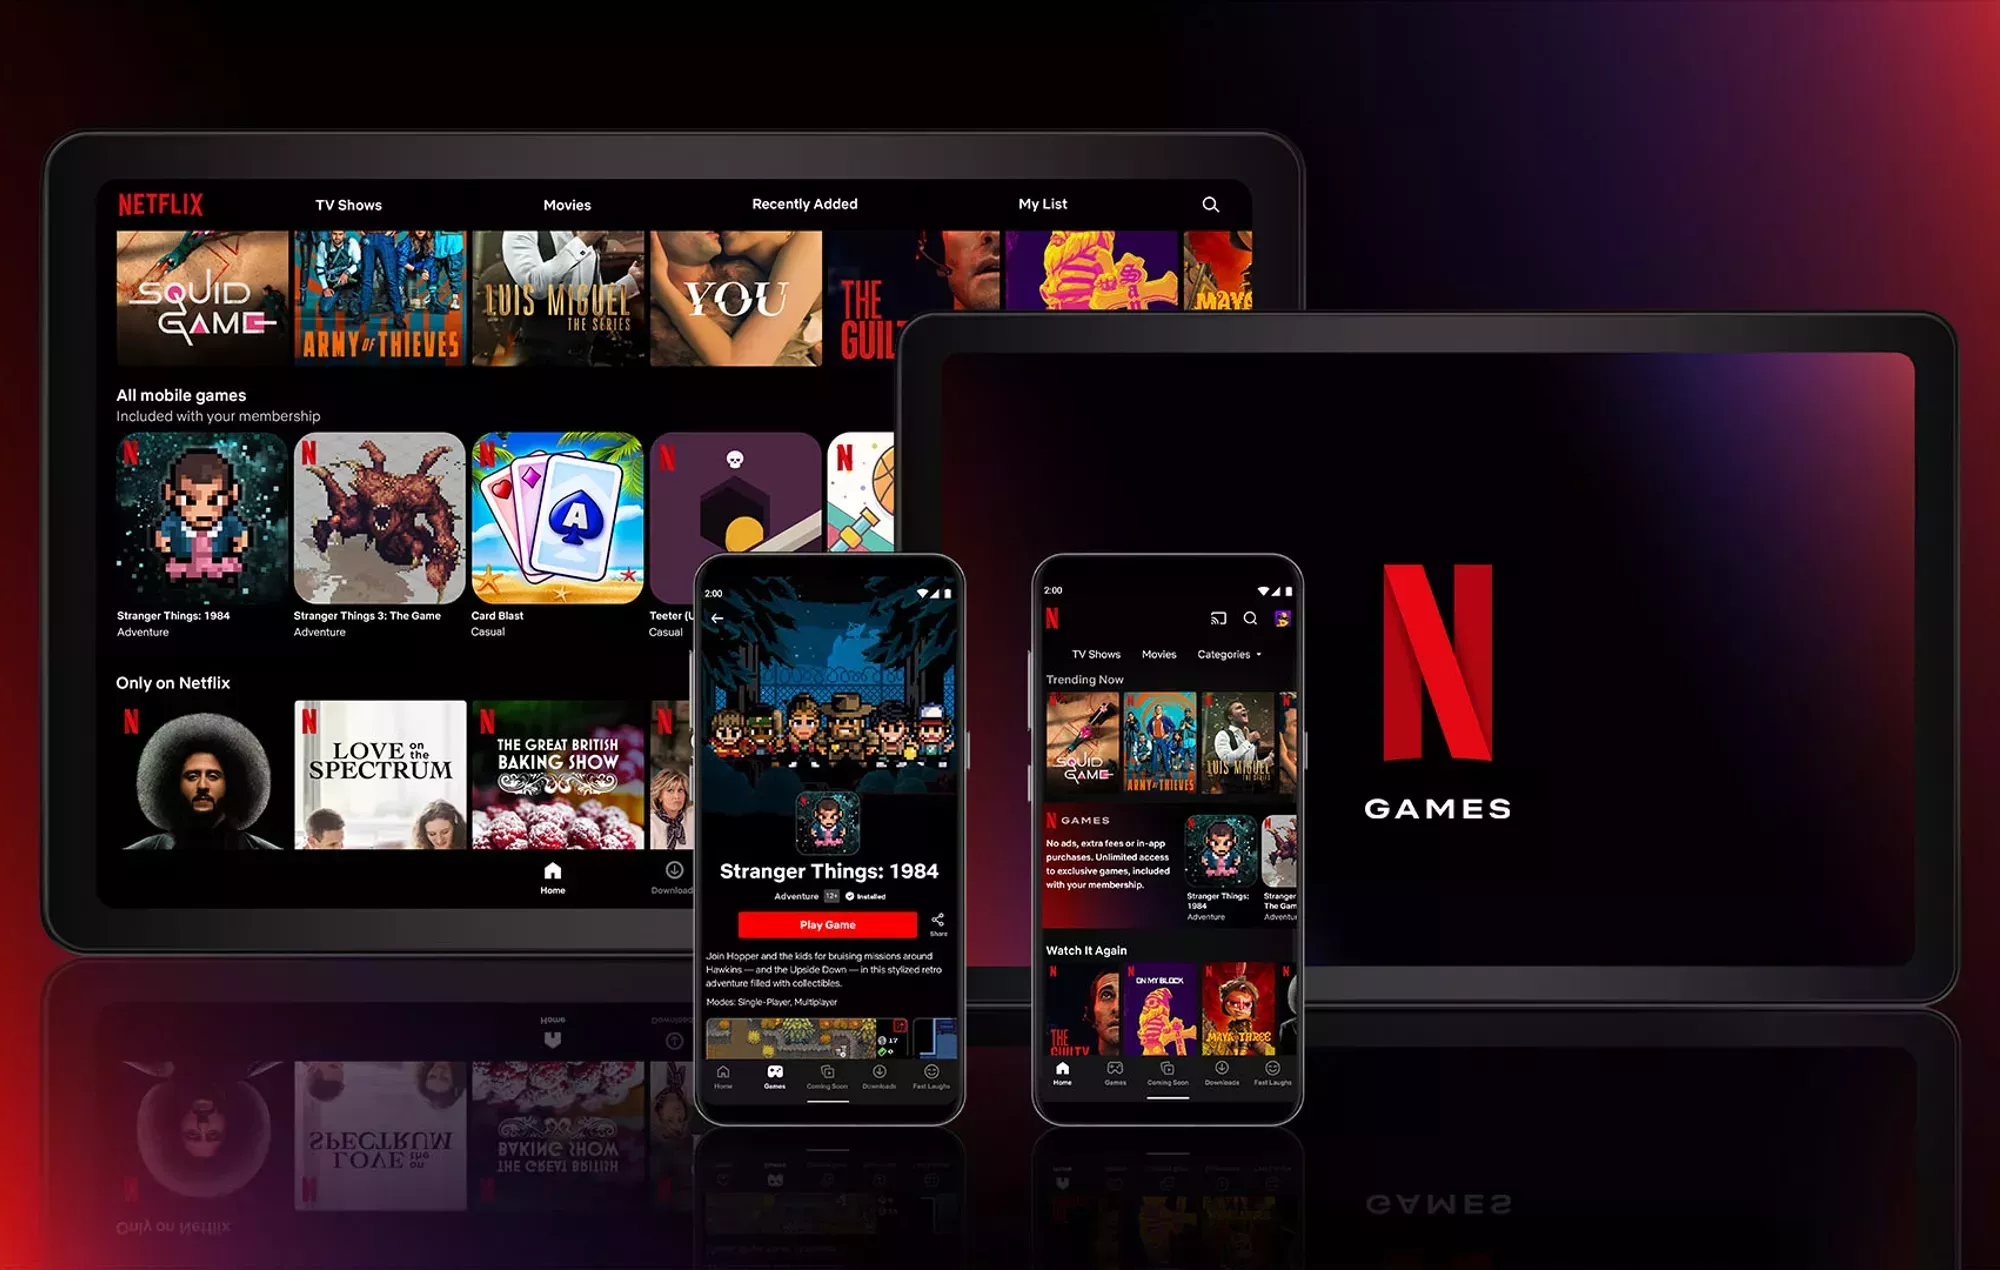 Marko Lastikka, de Zynga, se une a Netflix para abrir un nuevo estudio